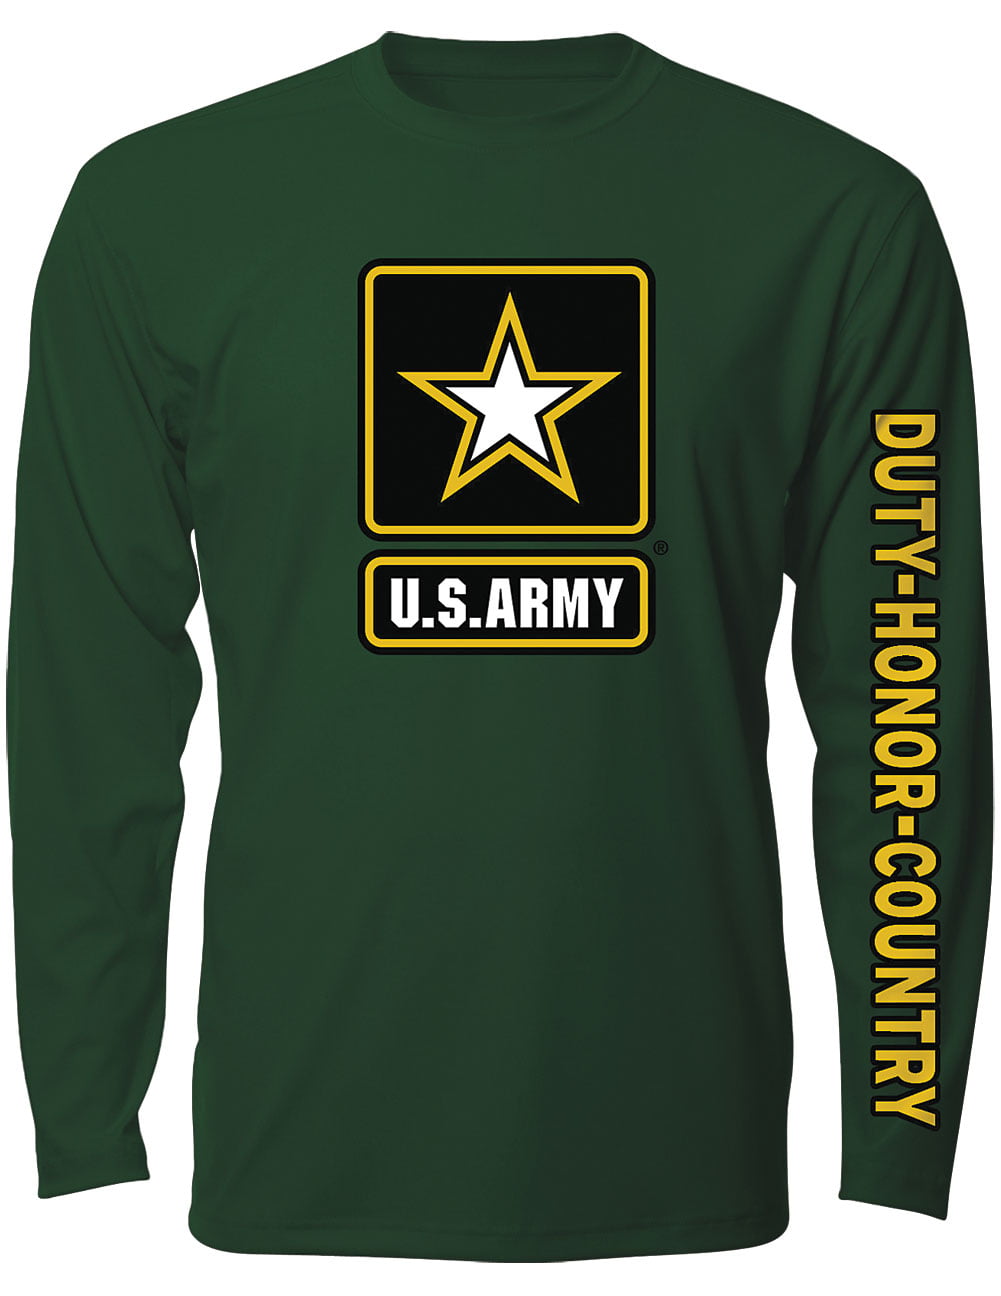 Army Shirts Walmart - Army Military